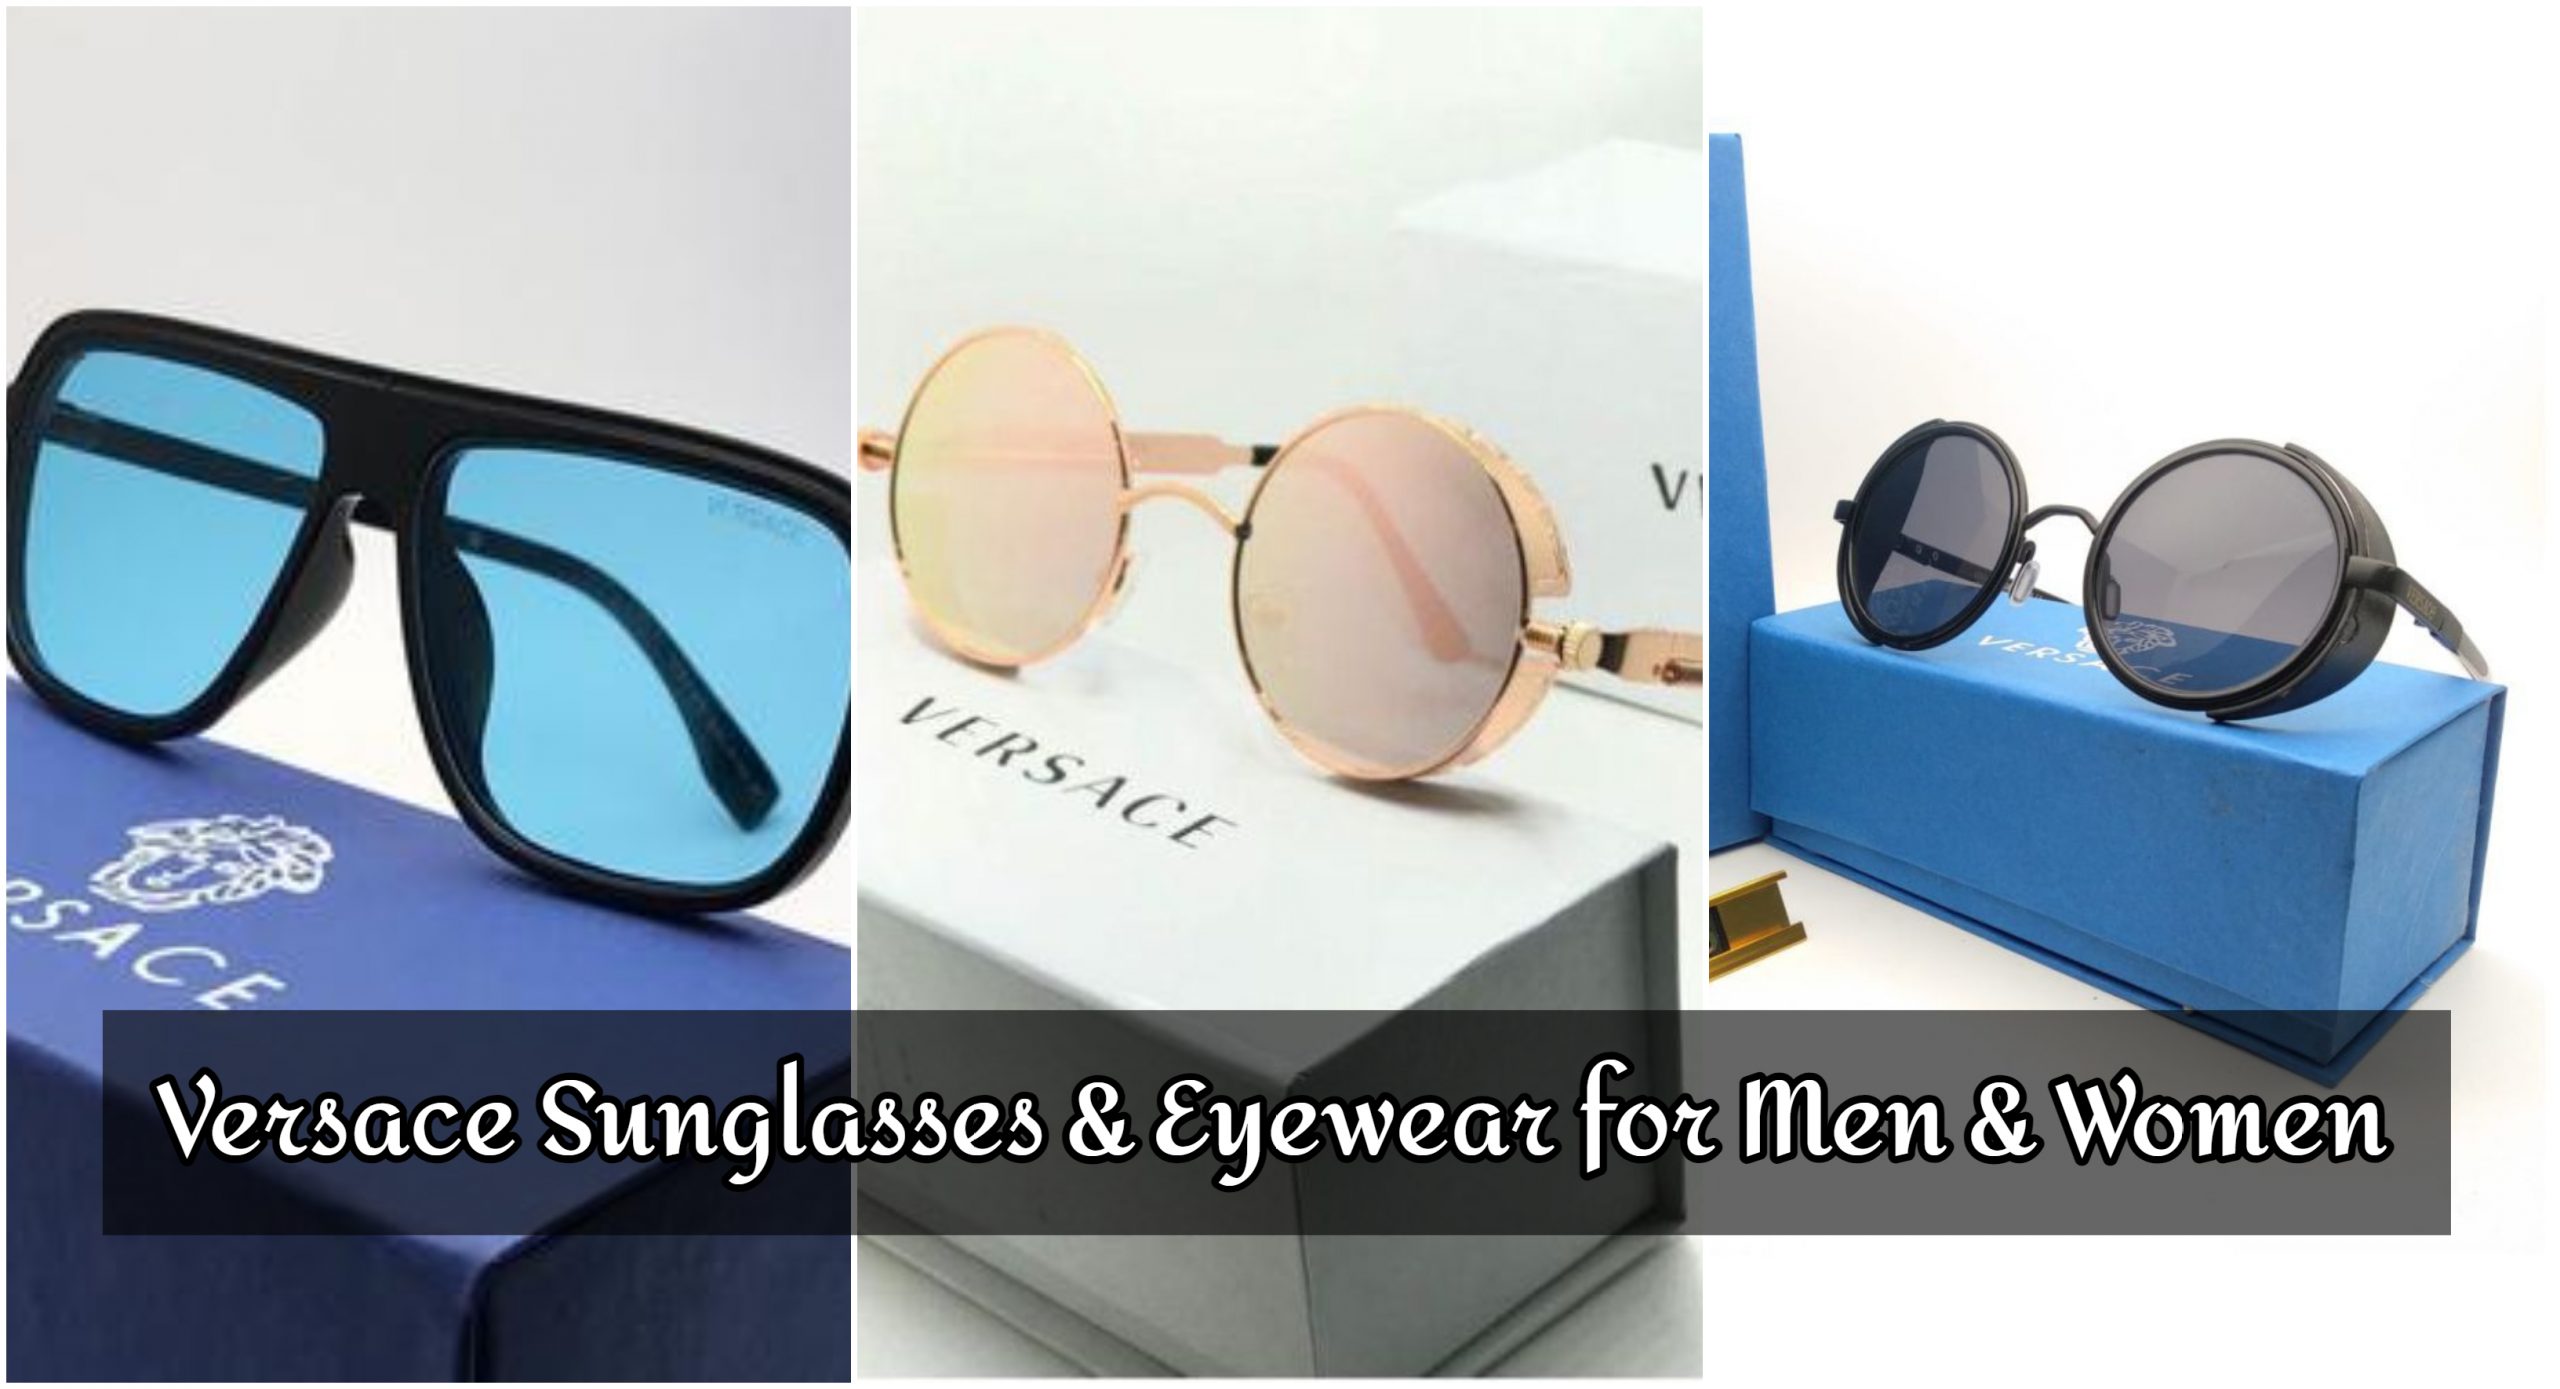 Versace Sunglasses & Eyewear Collection for Men & Women